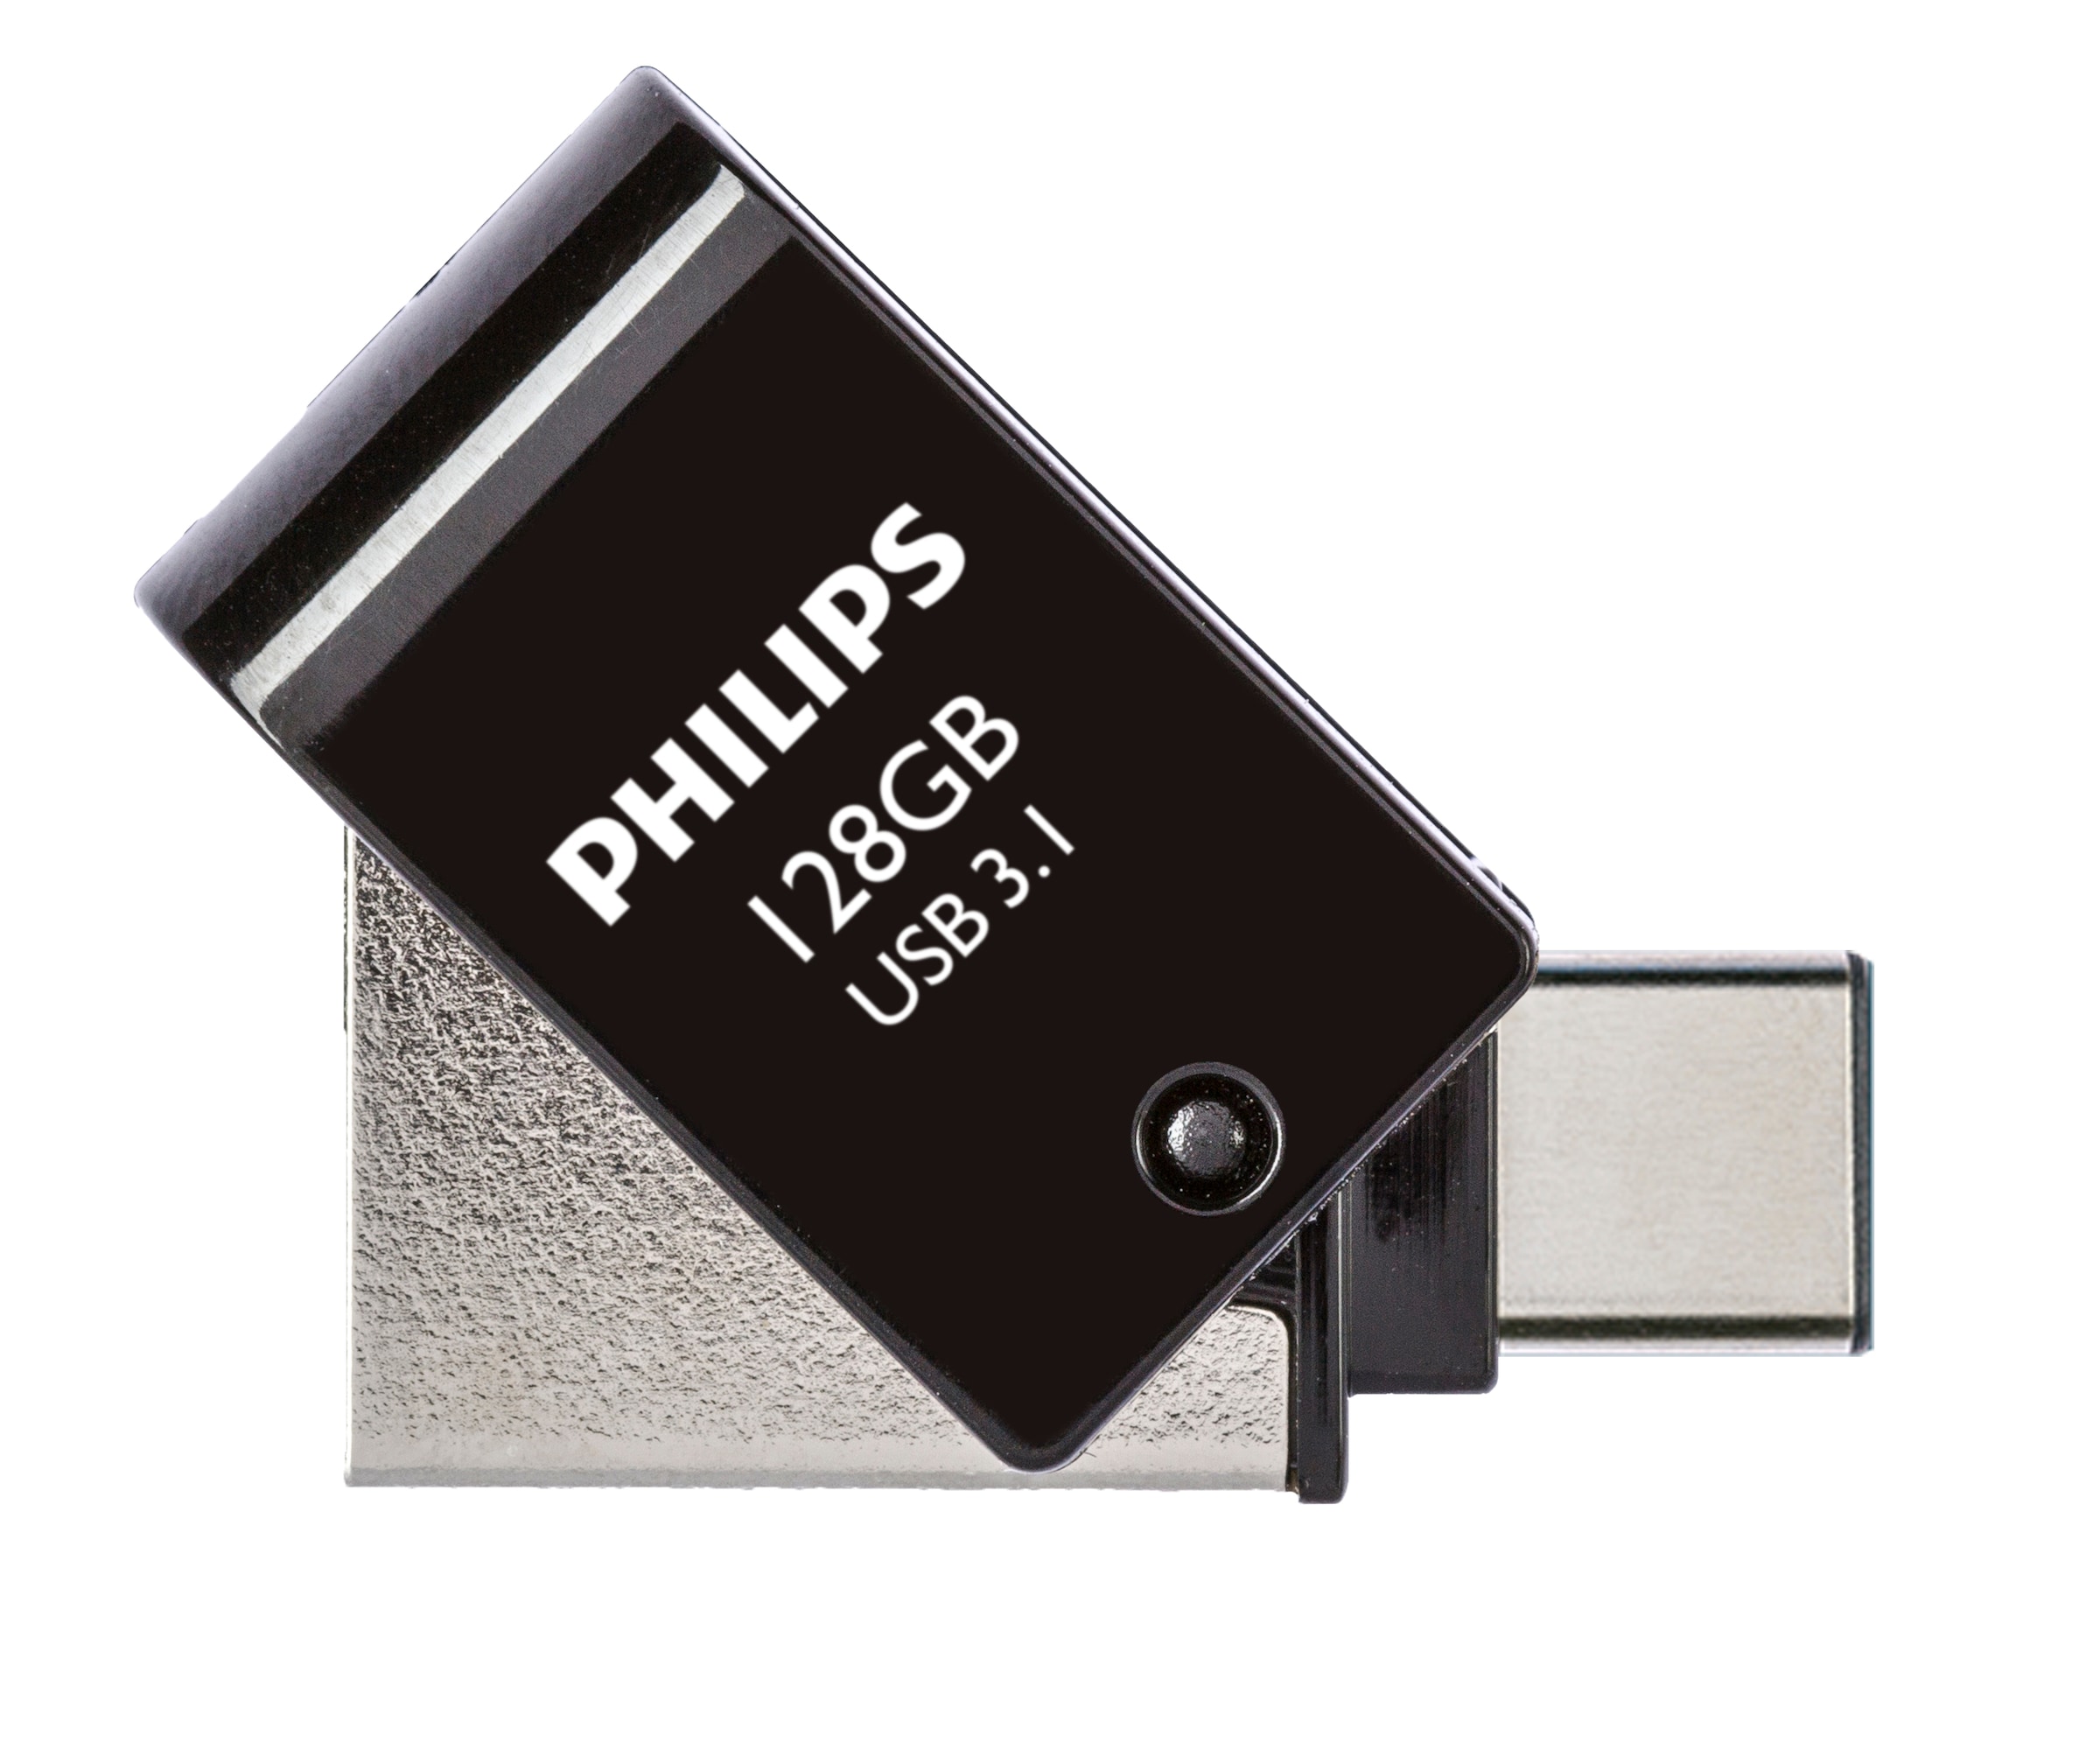 Philips Mini-USB-Stick »USB 2in1: 3.1 & Typ-C Midnight Black«, (USB 3.1 Lesegeschwindigkeit 180 MB/s)